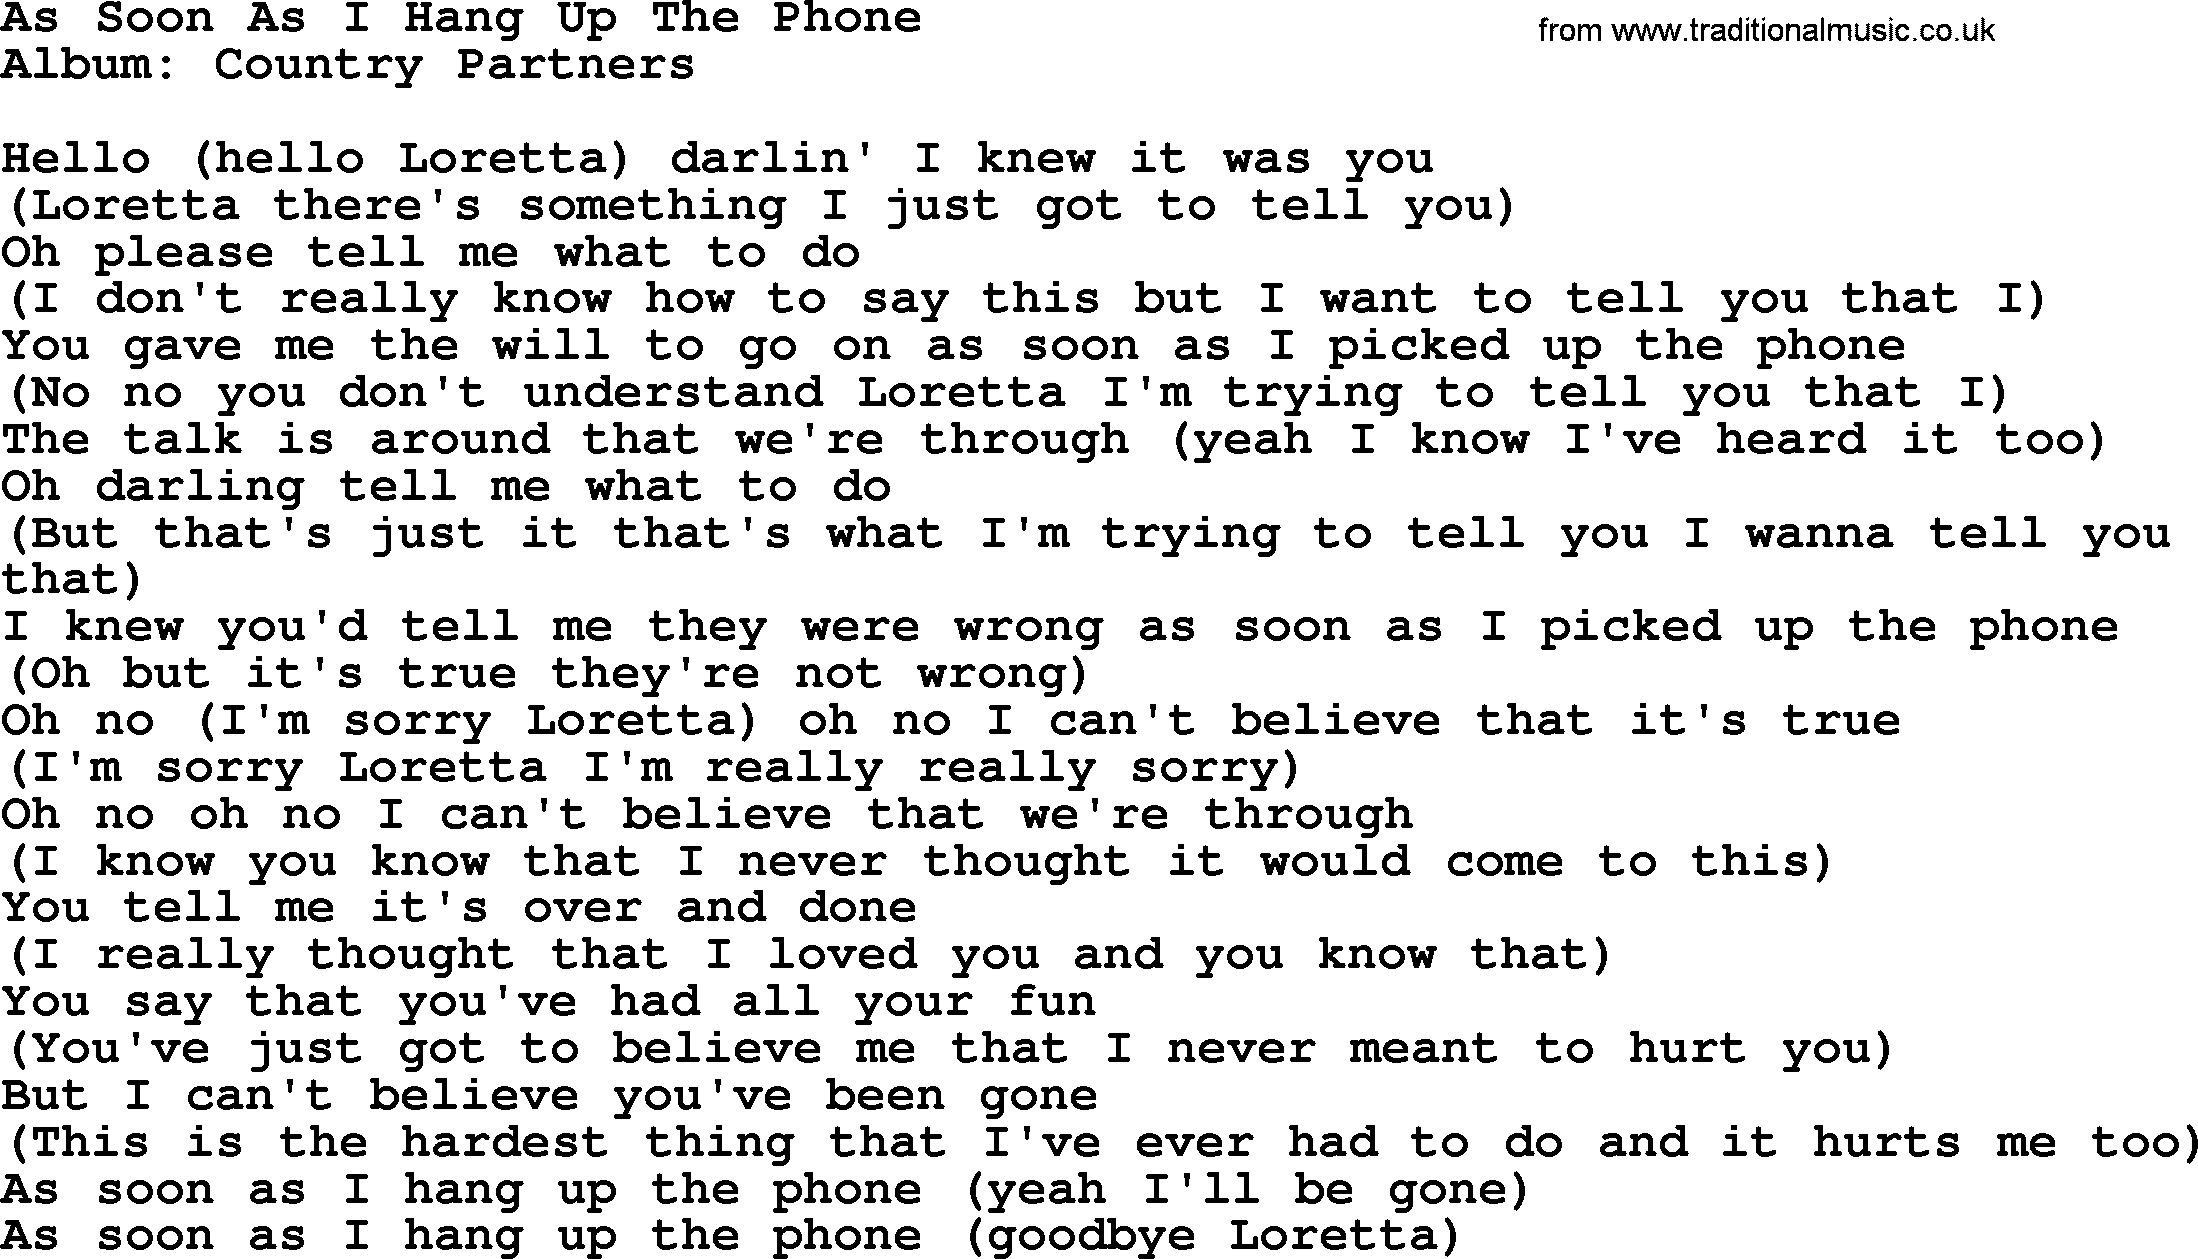 Loretta Lynn song: As Soon As I Hang Up The Phone lyrics